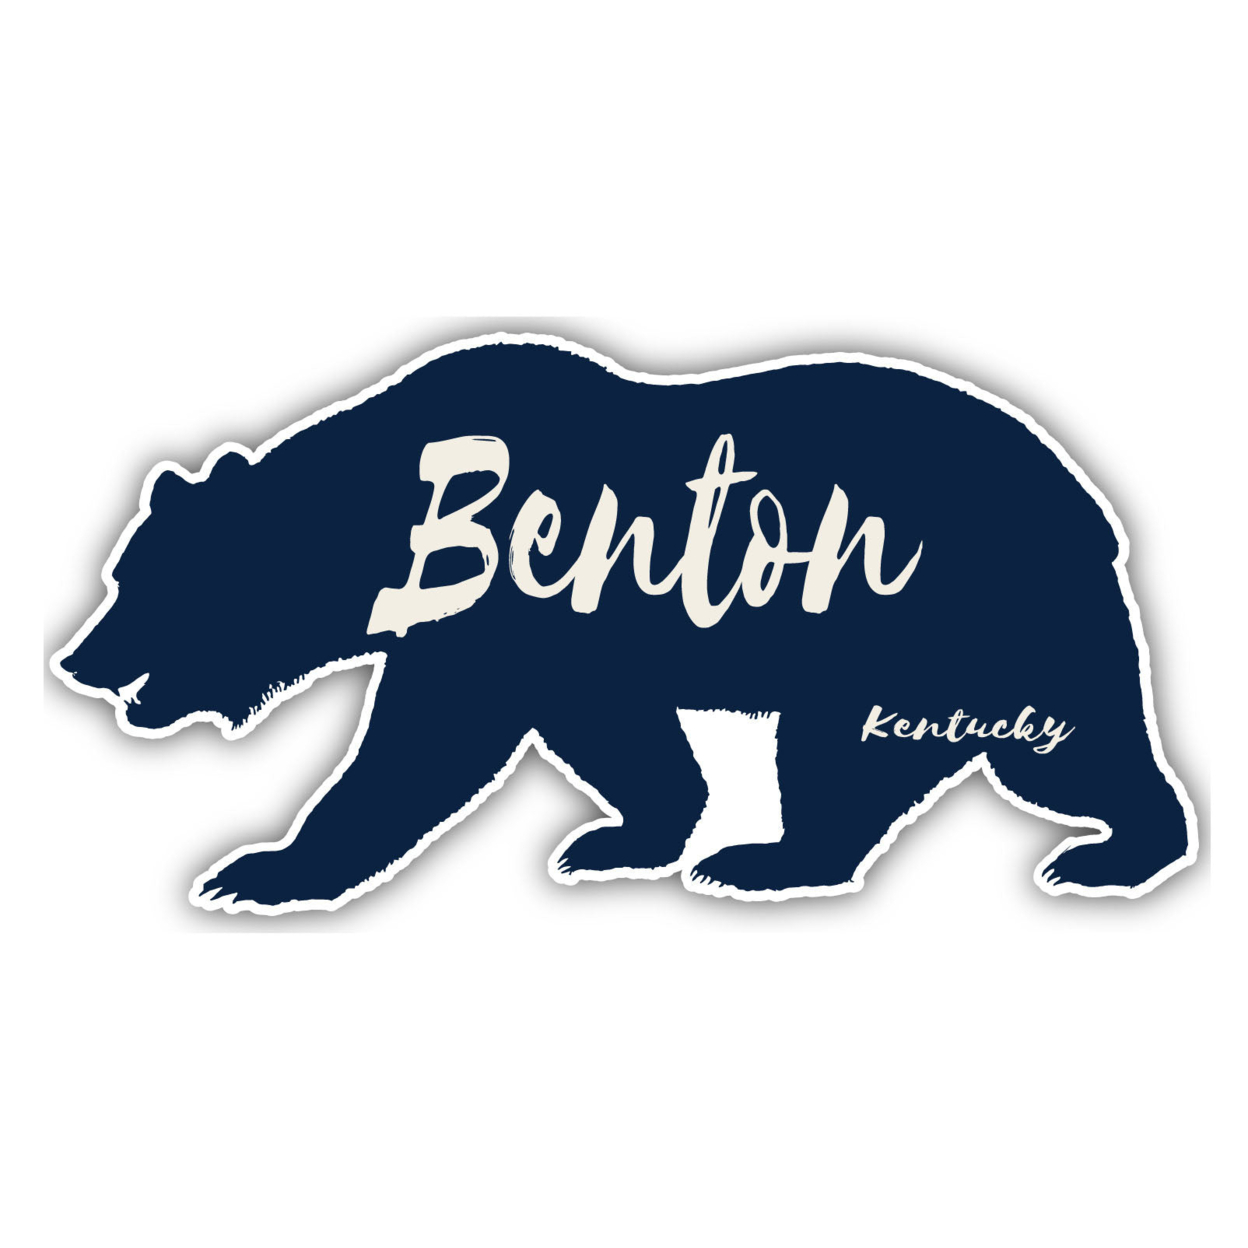 Benton Kentucky Souvenir Decorative Stickers (Choose Theme And Size) - Single Unit, 6-Inch, Great Outdoors